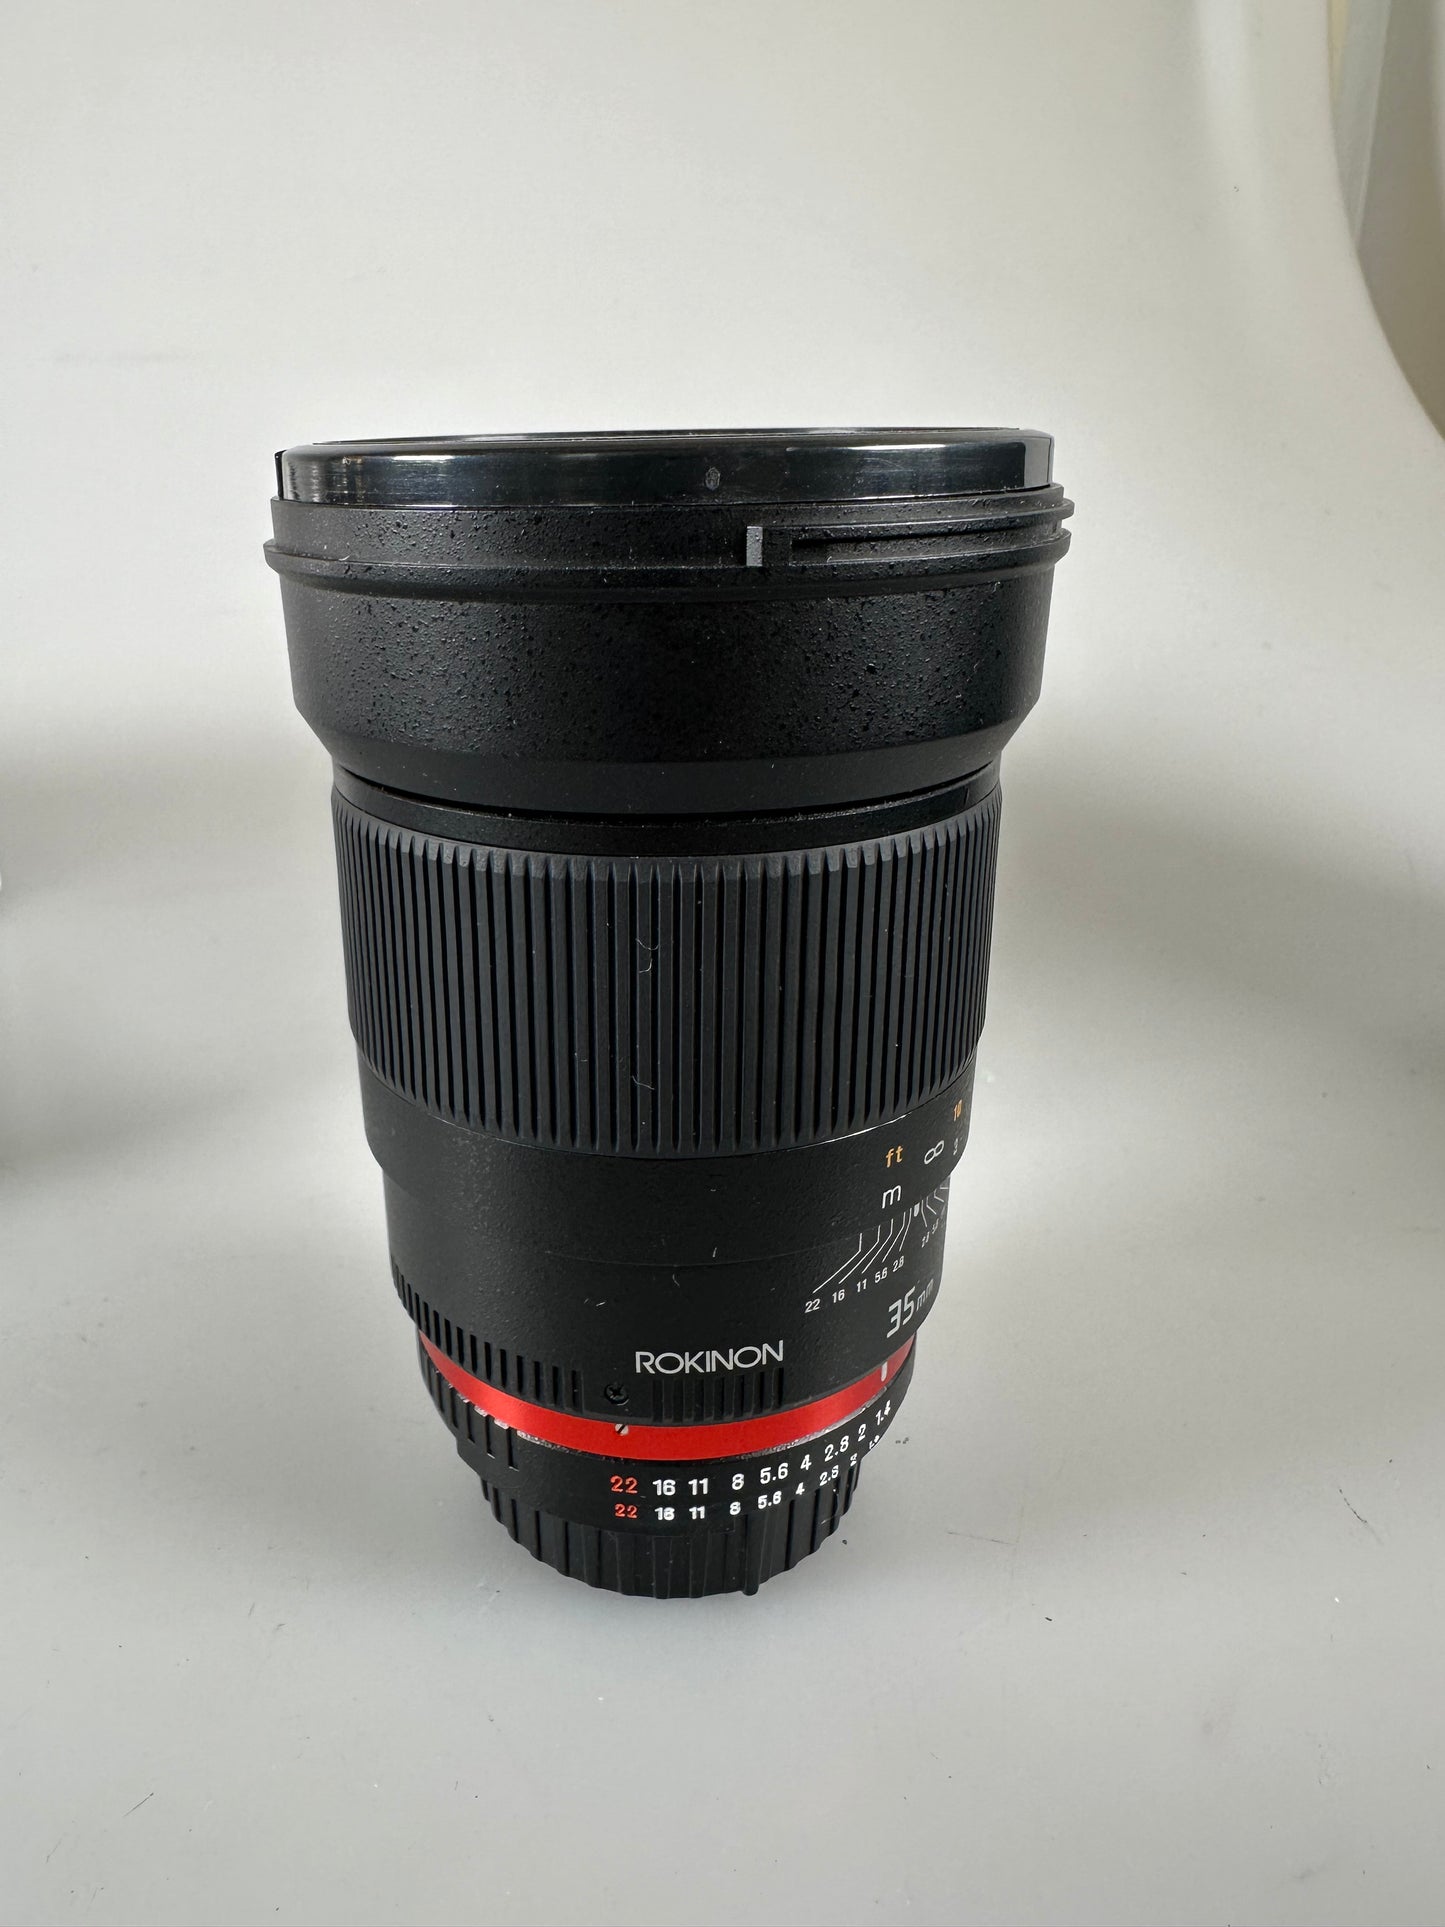 Rokinon 35mm f1.4 AS UMC Wide Angle Lens Nikon (Manual Focus, AE chip)